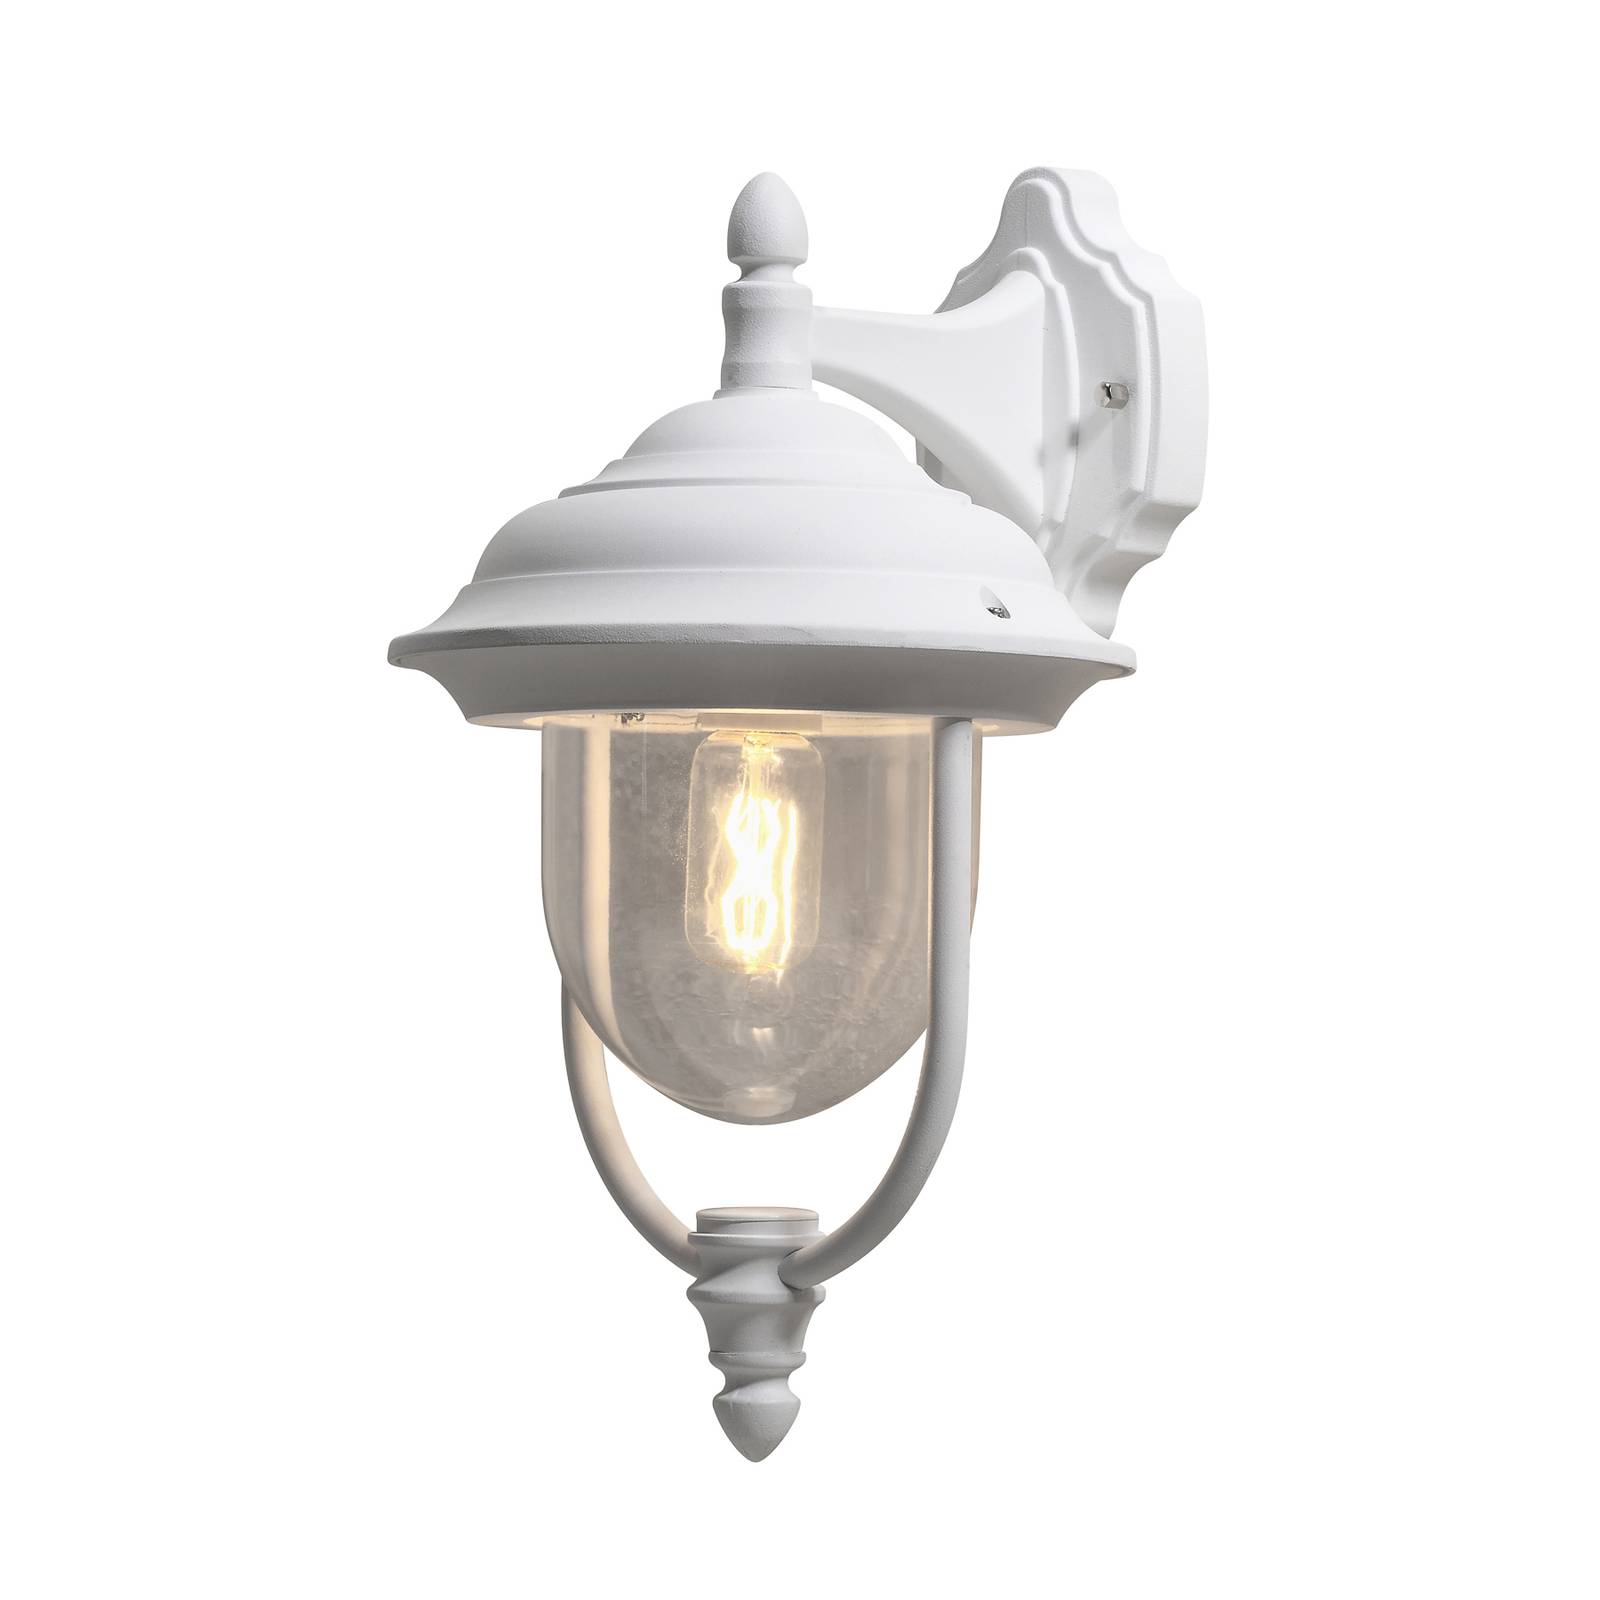 Photos - Floodlight / Street Light Konstsmide Parma outdoor wall light, hanging lantern in white